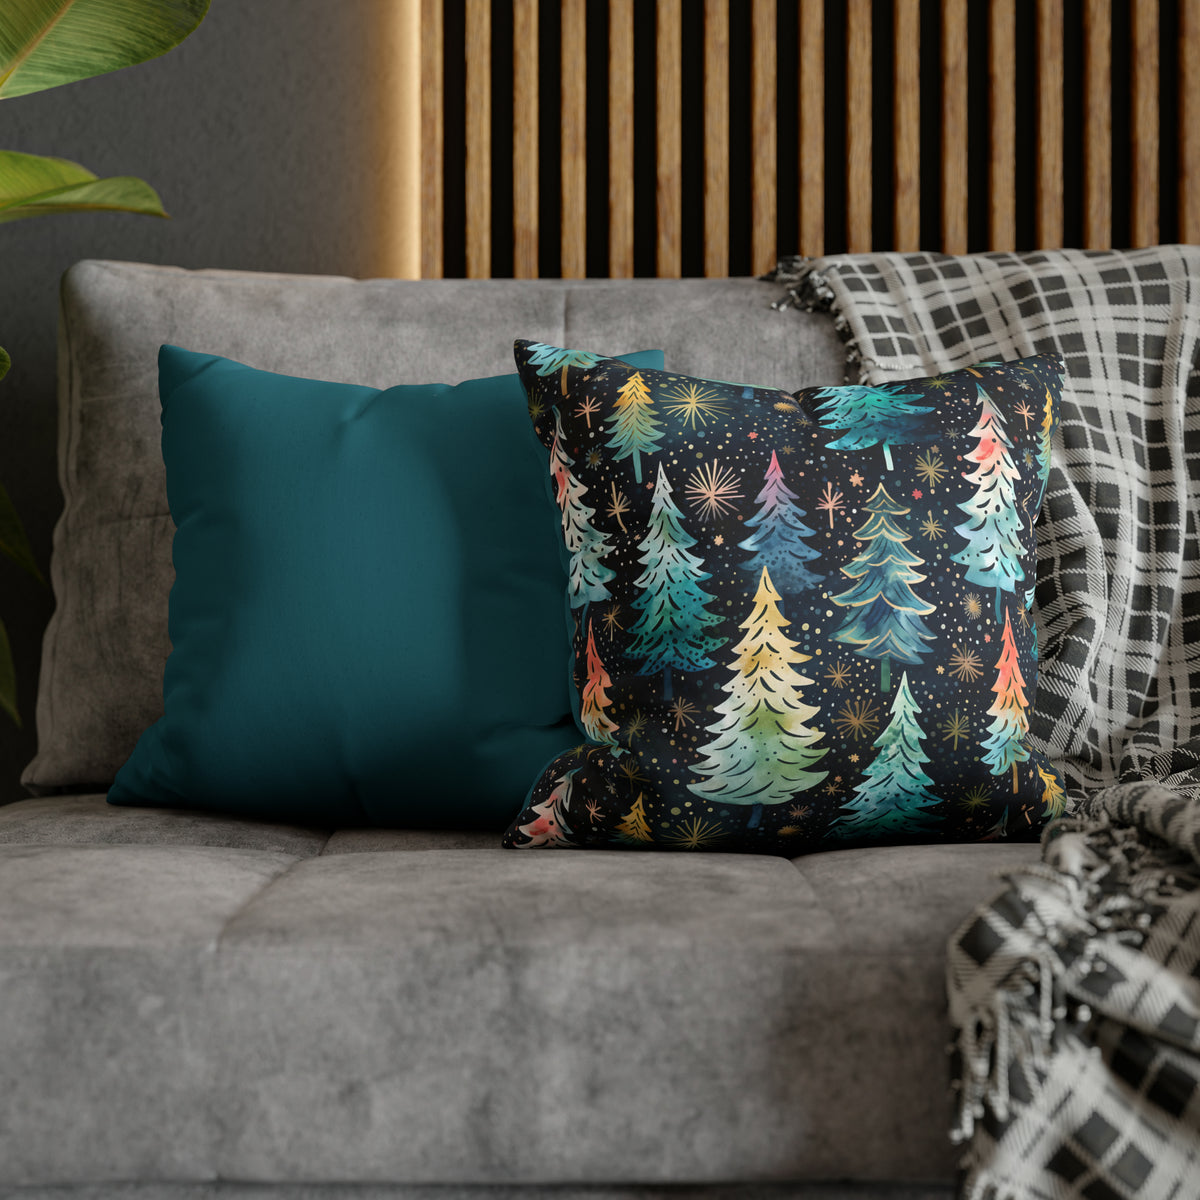 Teal Christmas Tree Throw Pillow Case | Christmas Pillow Home Decor | Faux Suede Decorative Throw Pillow Case